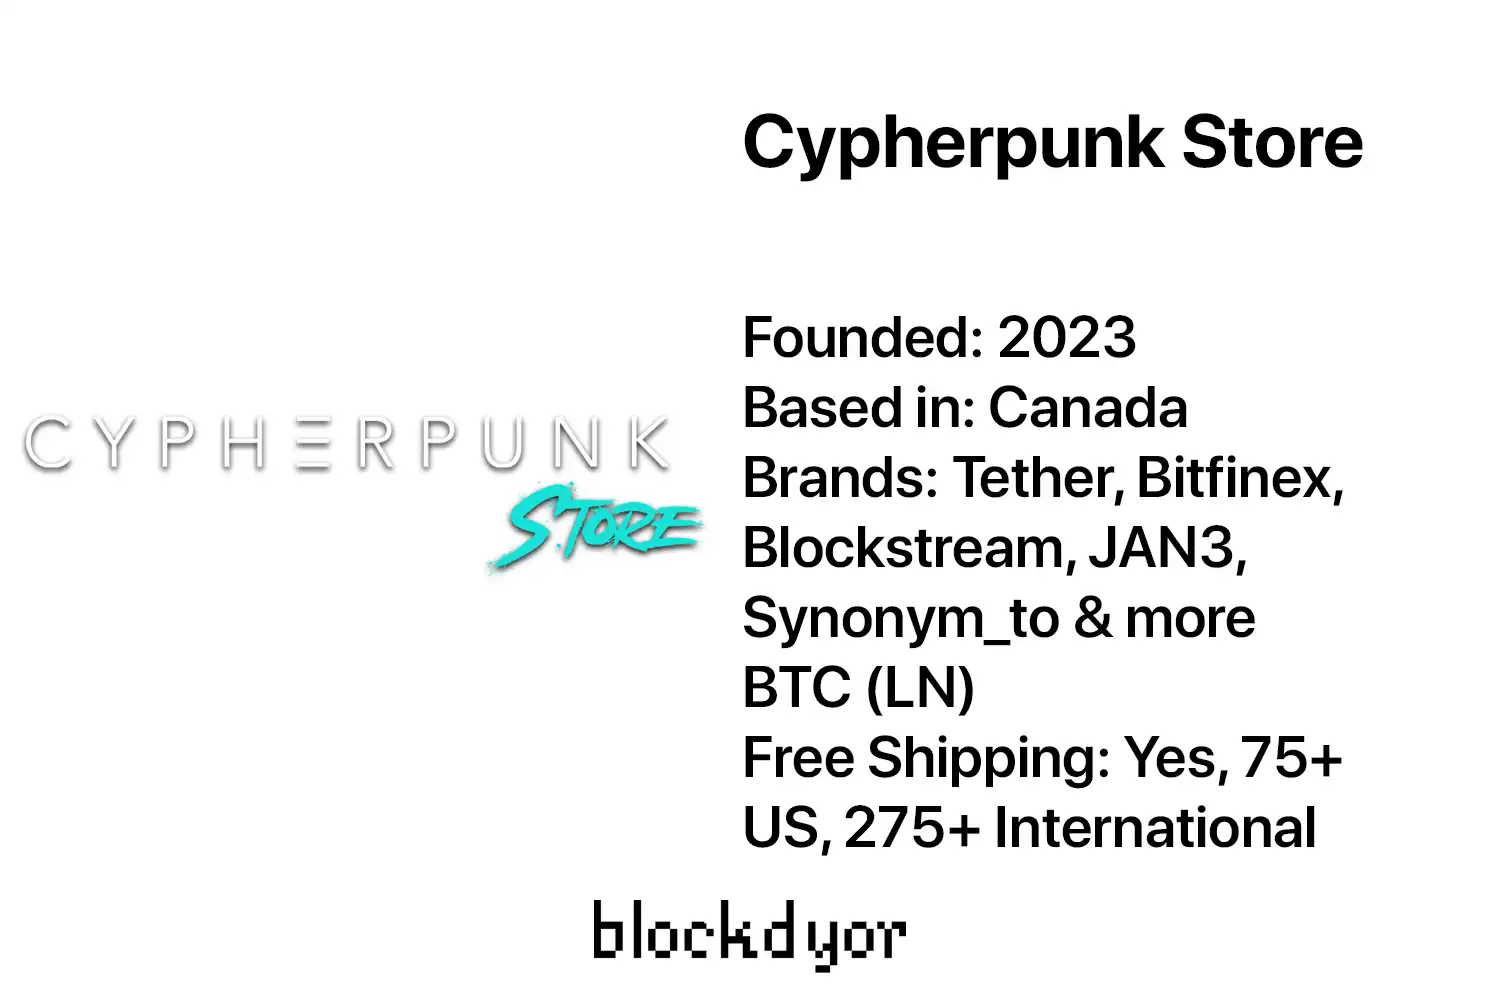 Cypherpunk Store Overview